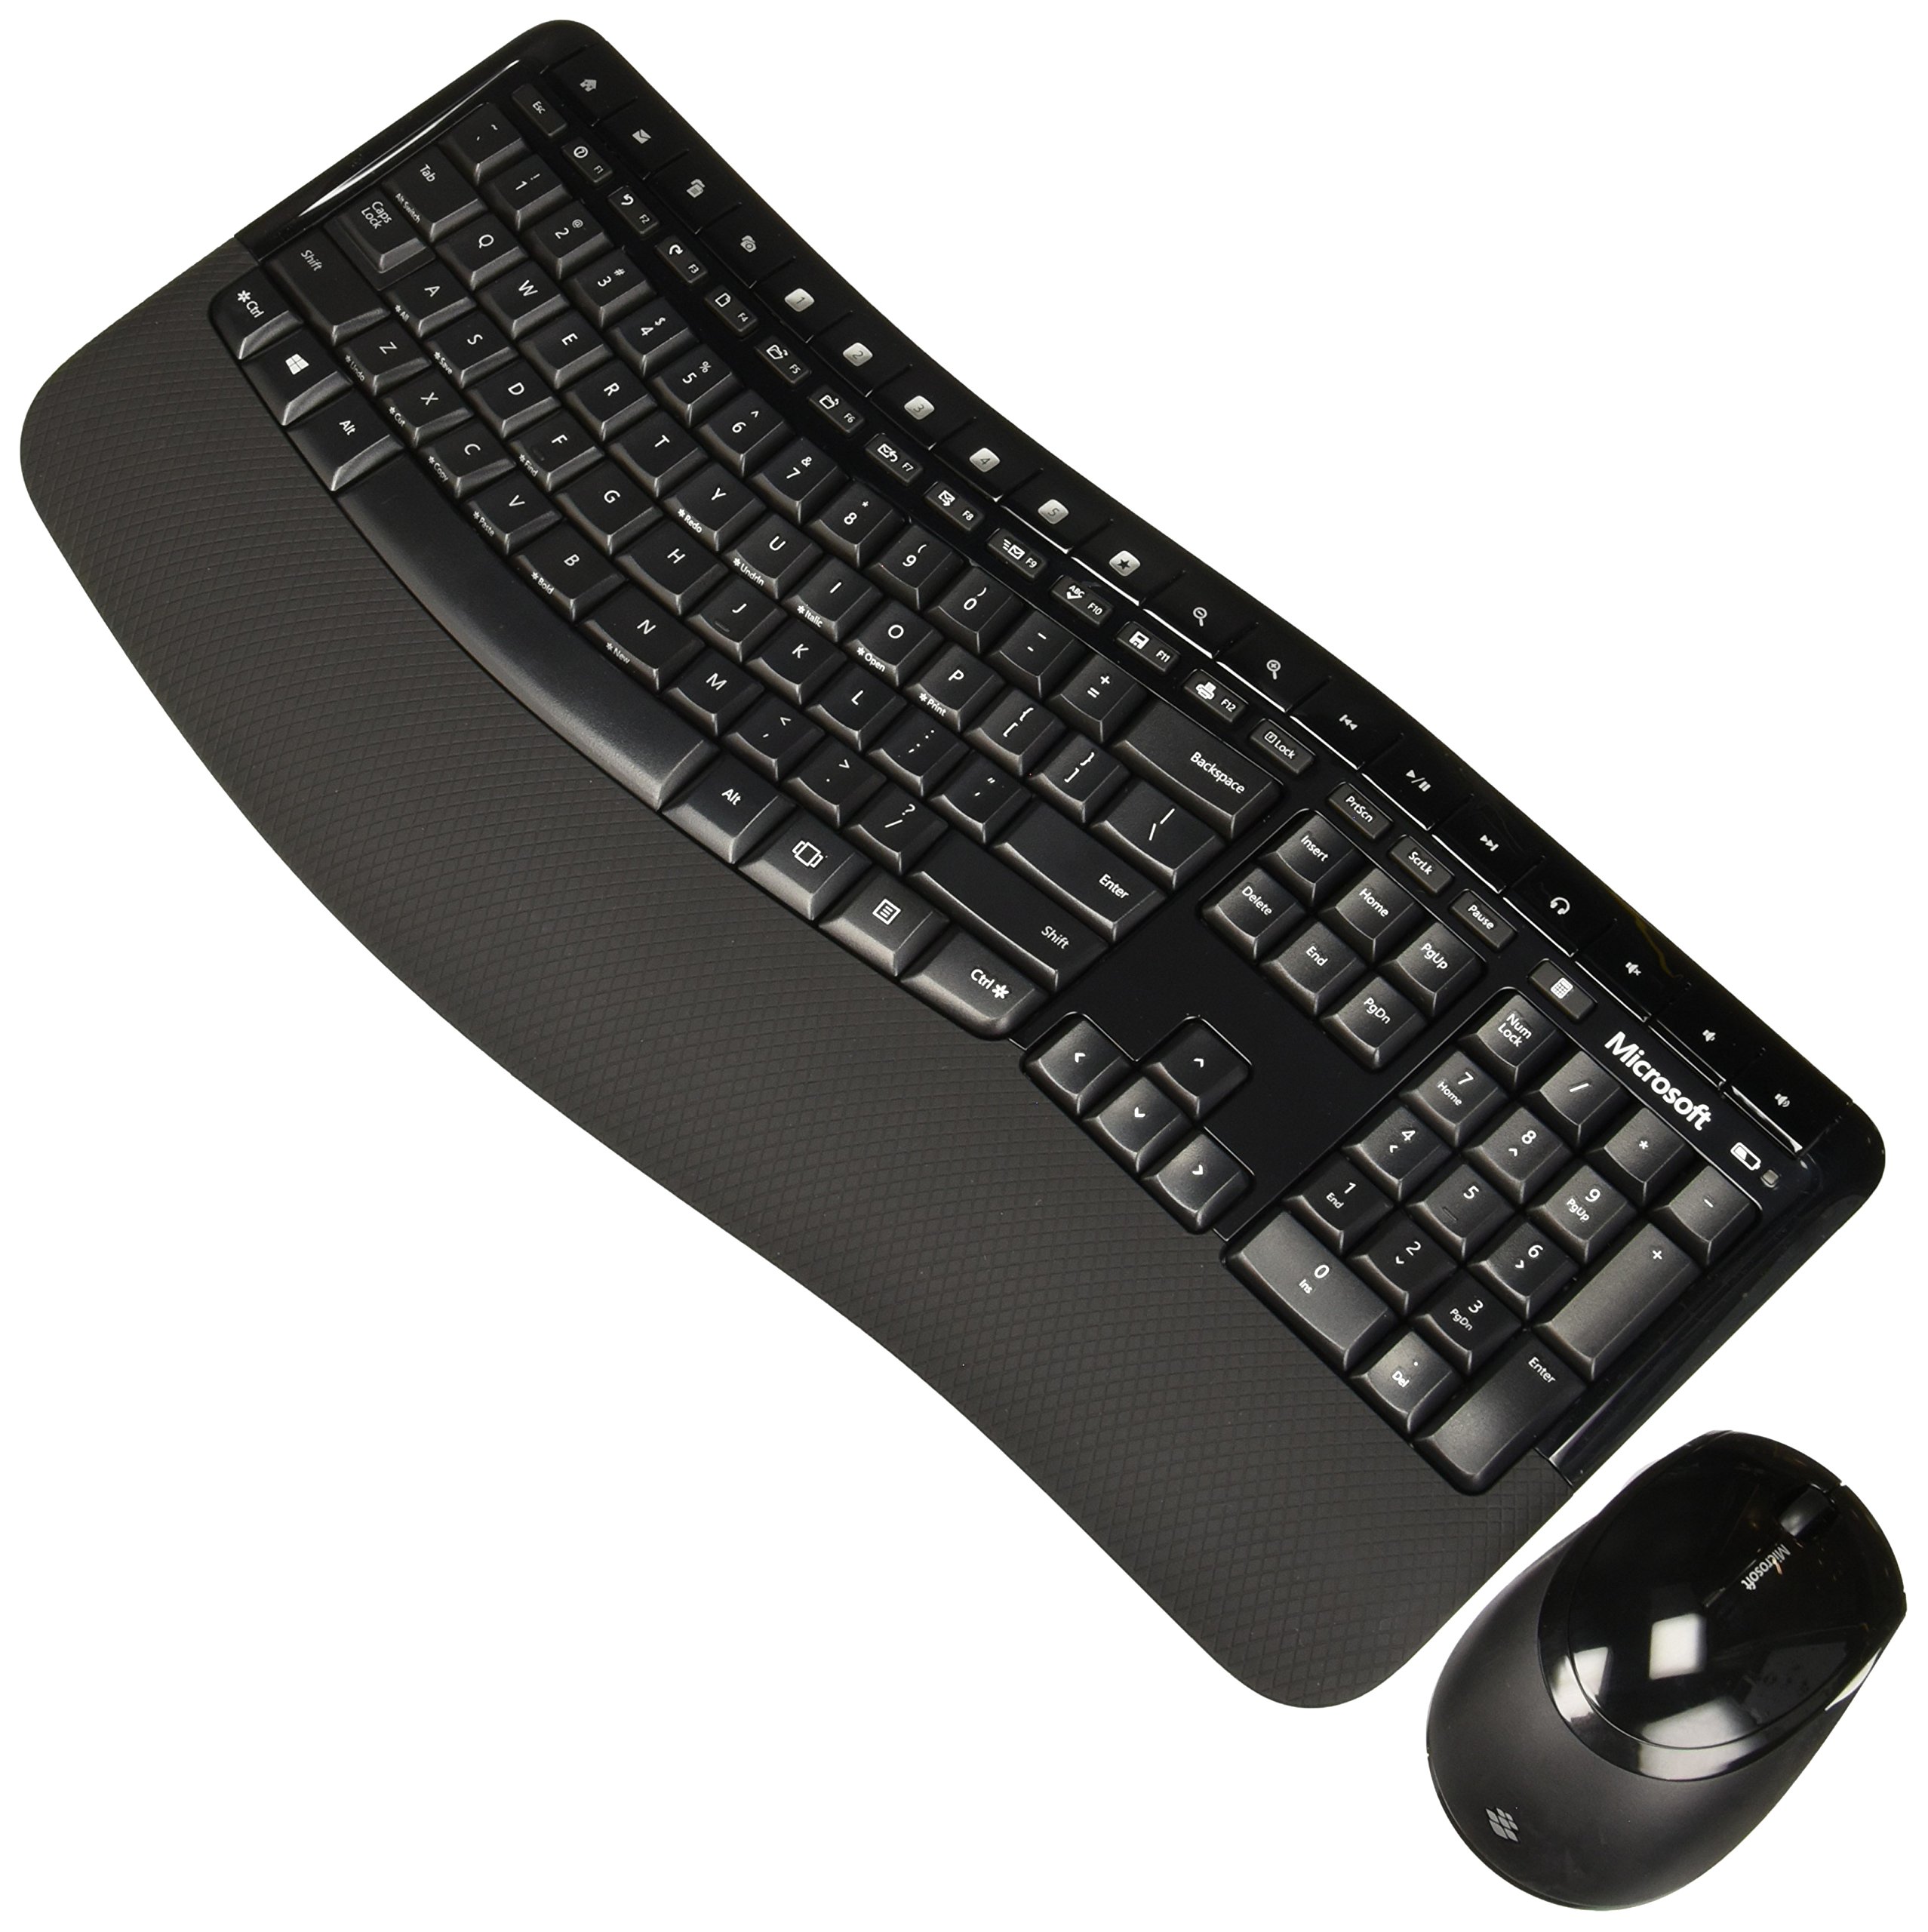 Microsoft Wireless Comfort Desktop 5050 - Black. Wireless, Ergonomic Keyboard and Mouse Combo. Built-in Palm Rest and Comfort Curve Design. Customizable Windows Shortcut Keys